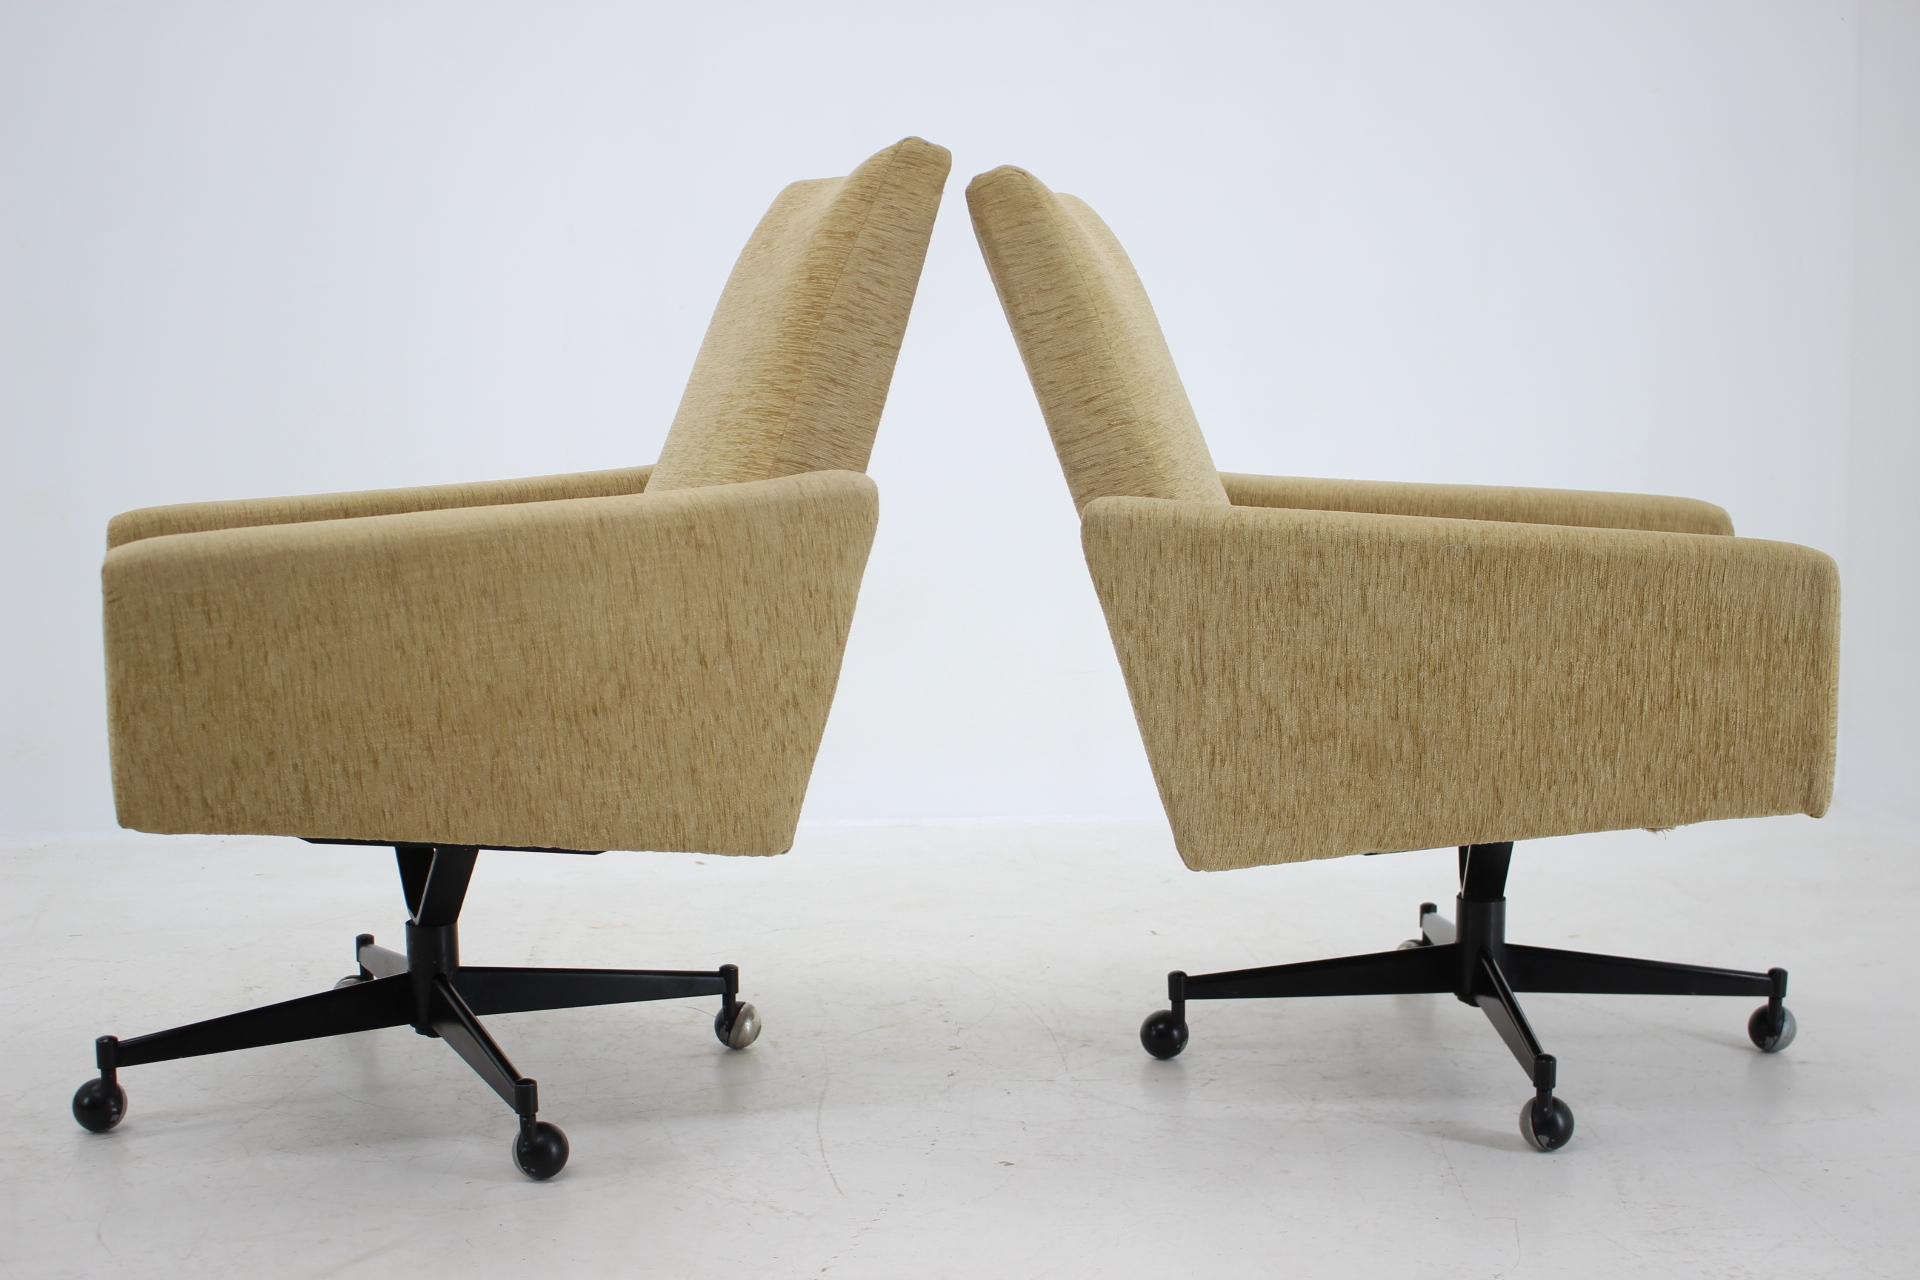 - Made in Czechoslovakia
- circa 1970
- Made of metal, fabric
- Original upholstery
- Good, original condition.